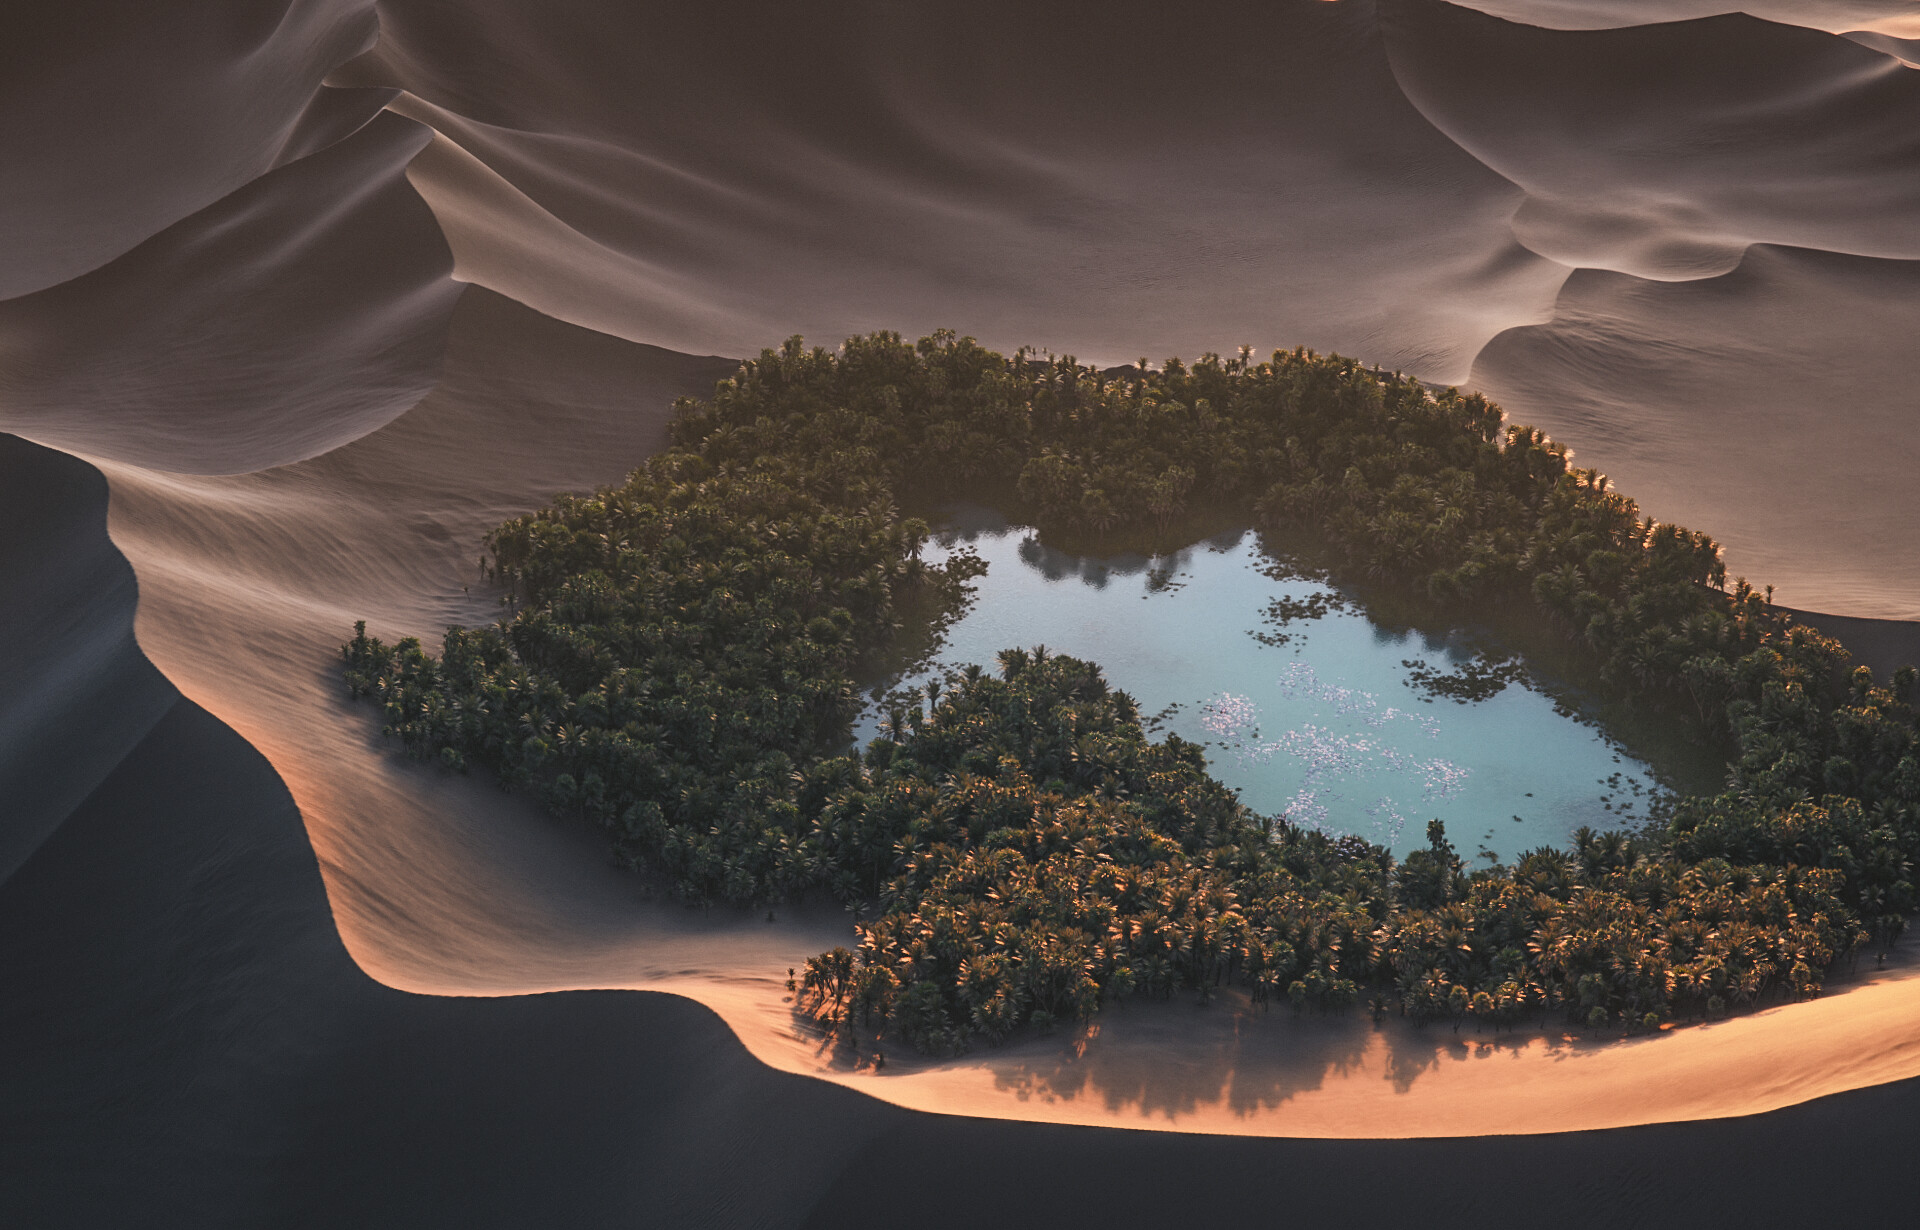 Desert Oasis - Finished Projects - Blender Artists Community